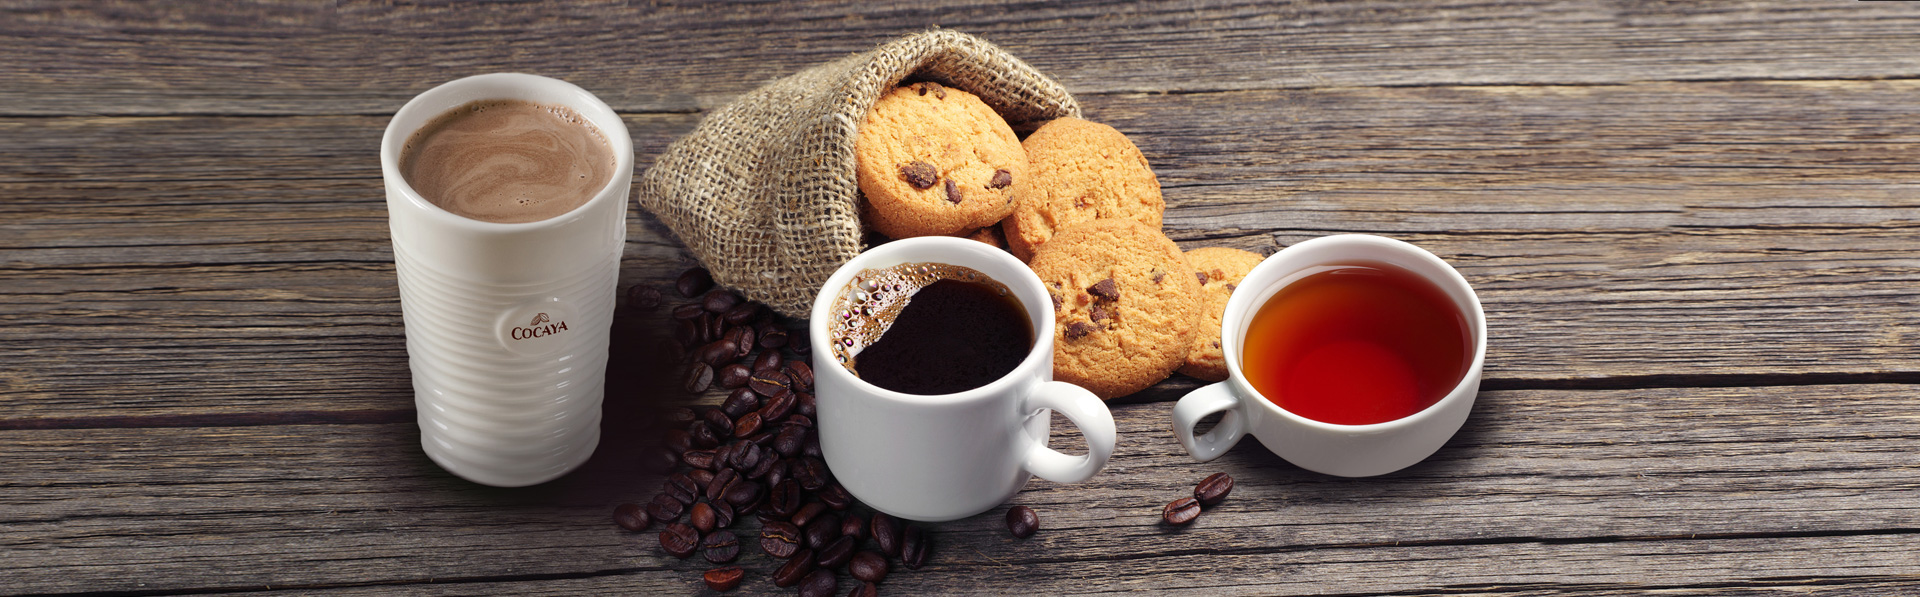 Kaffee,Tee,Kakao und Kekse